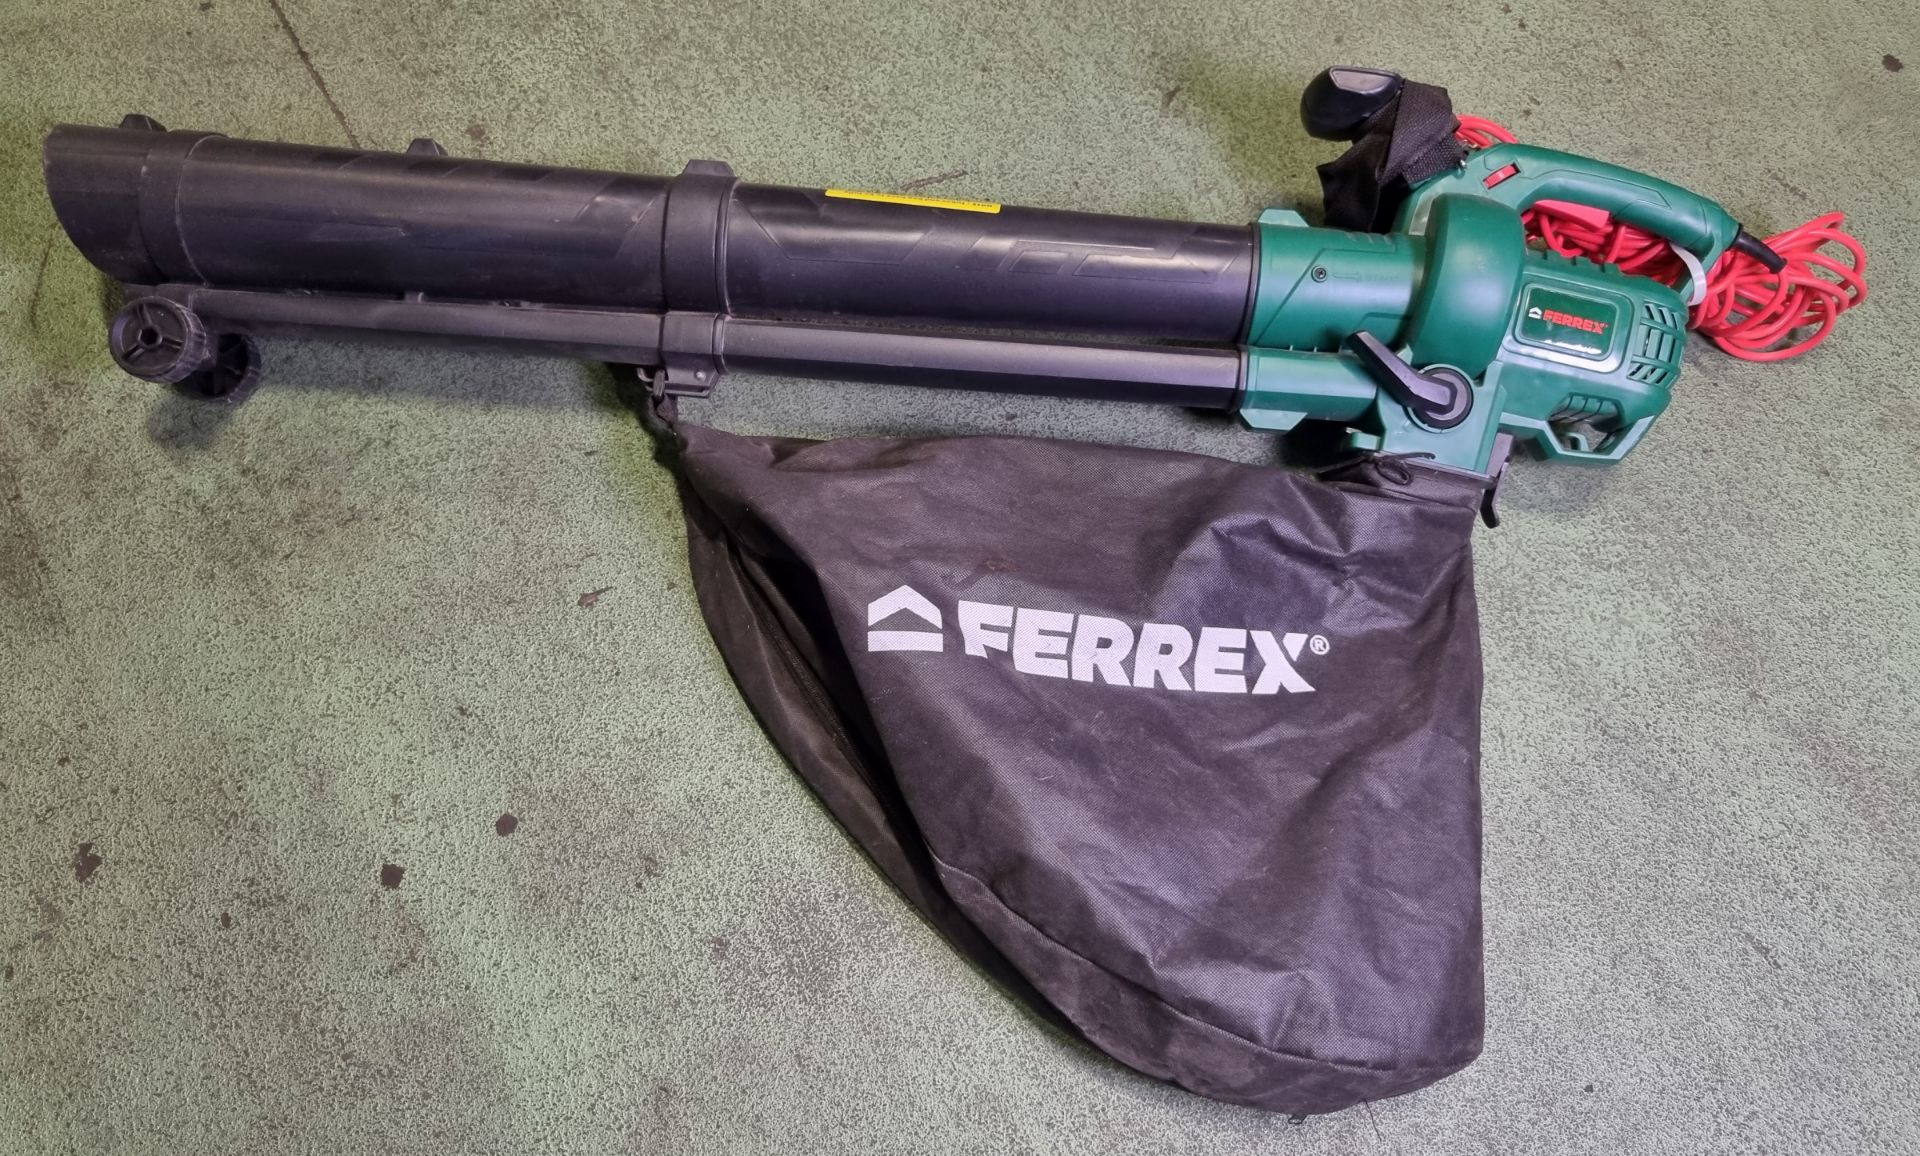 Ferrex XYZ579 electric garden blower / vac 230v - Image 2 of 6